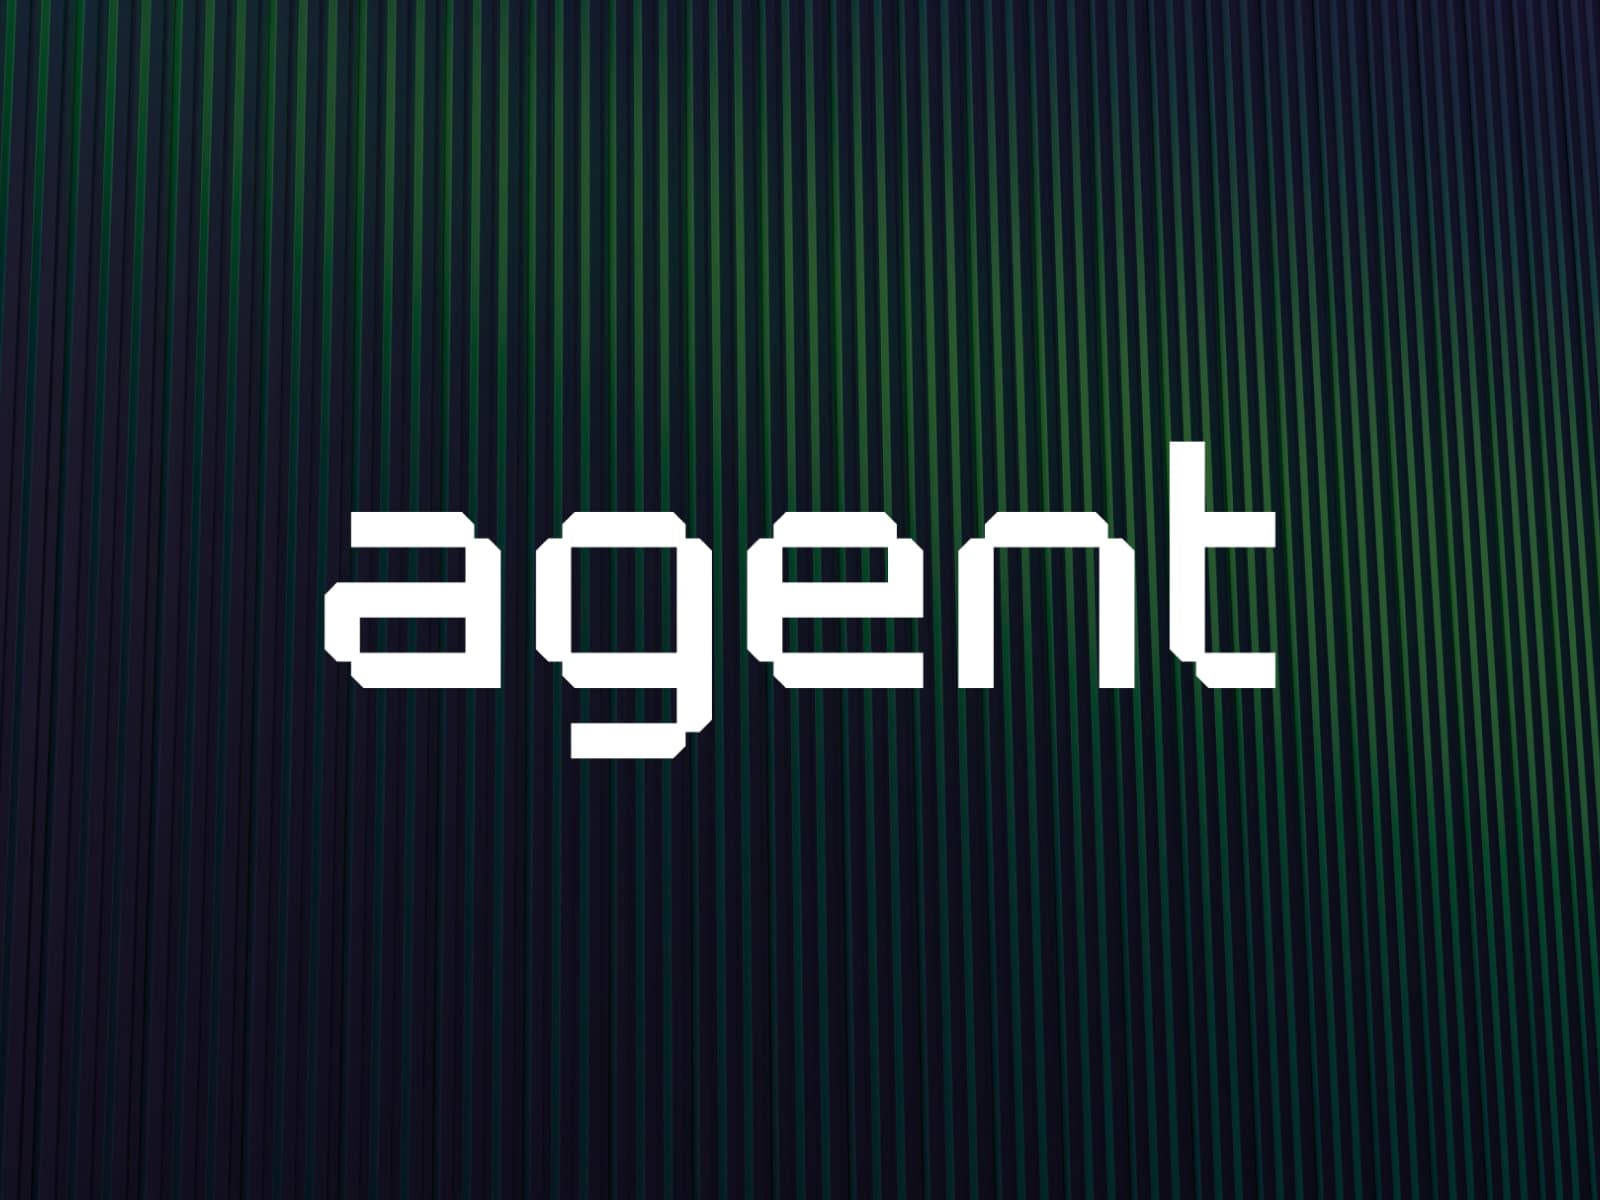 Agent Display Font